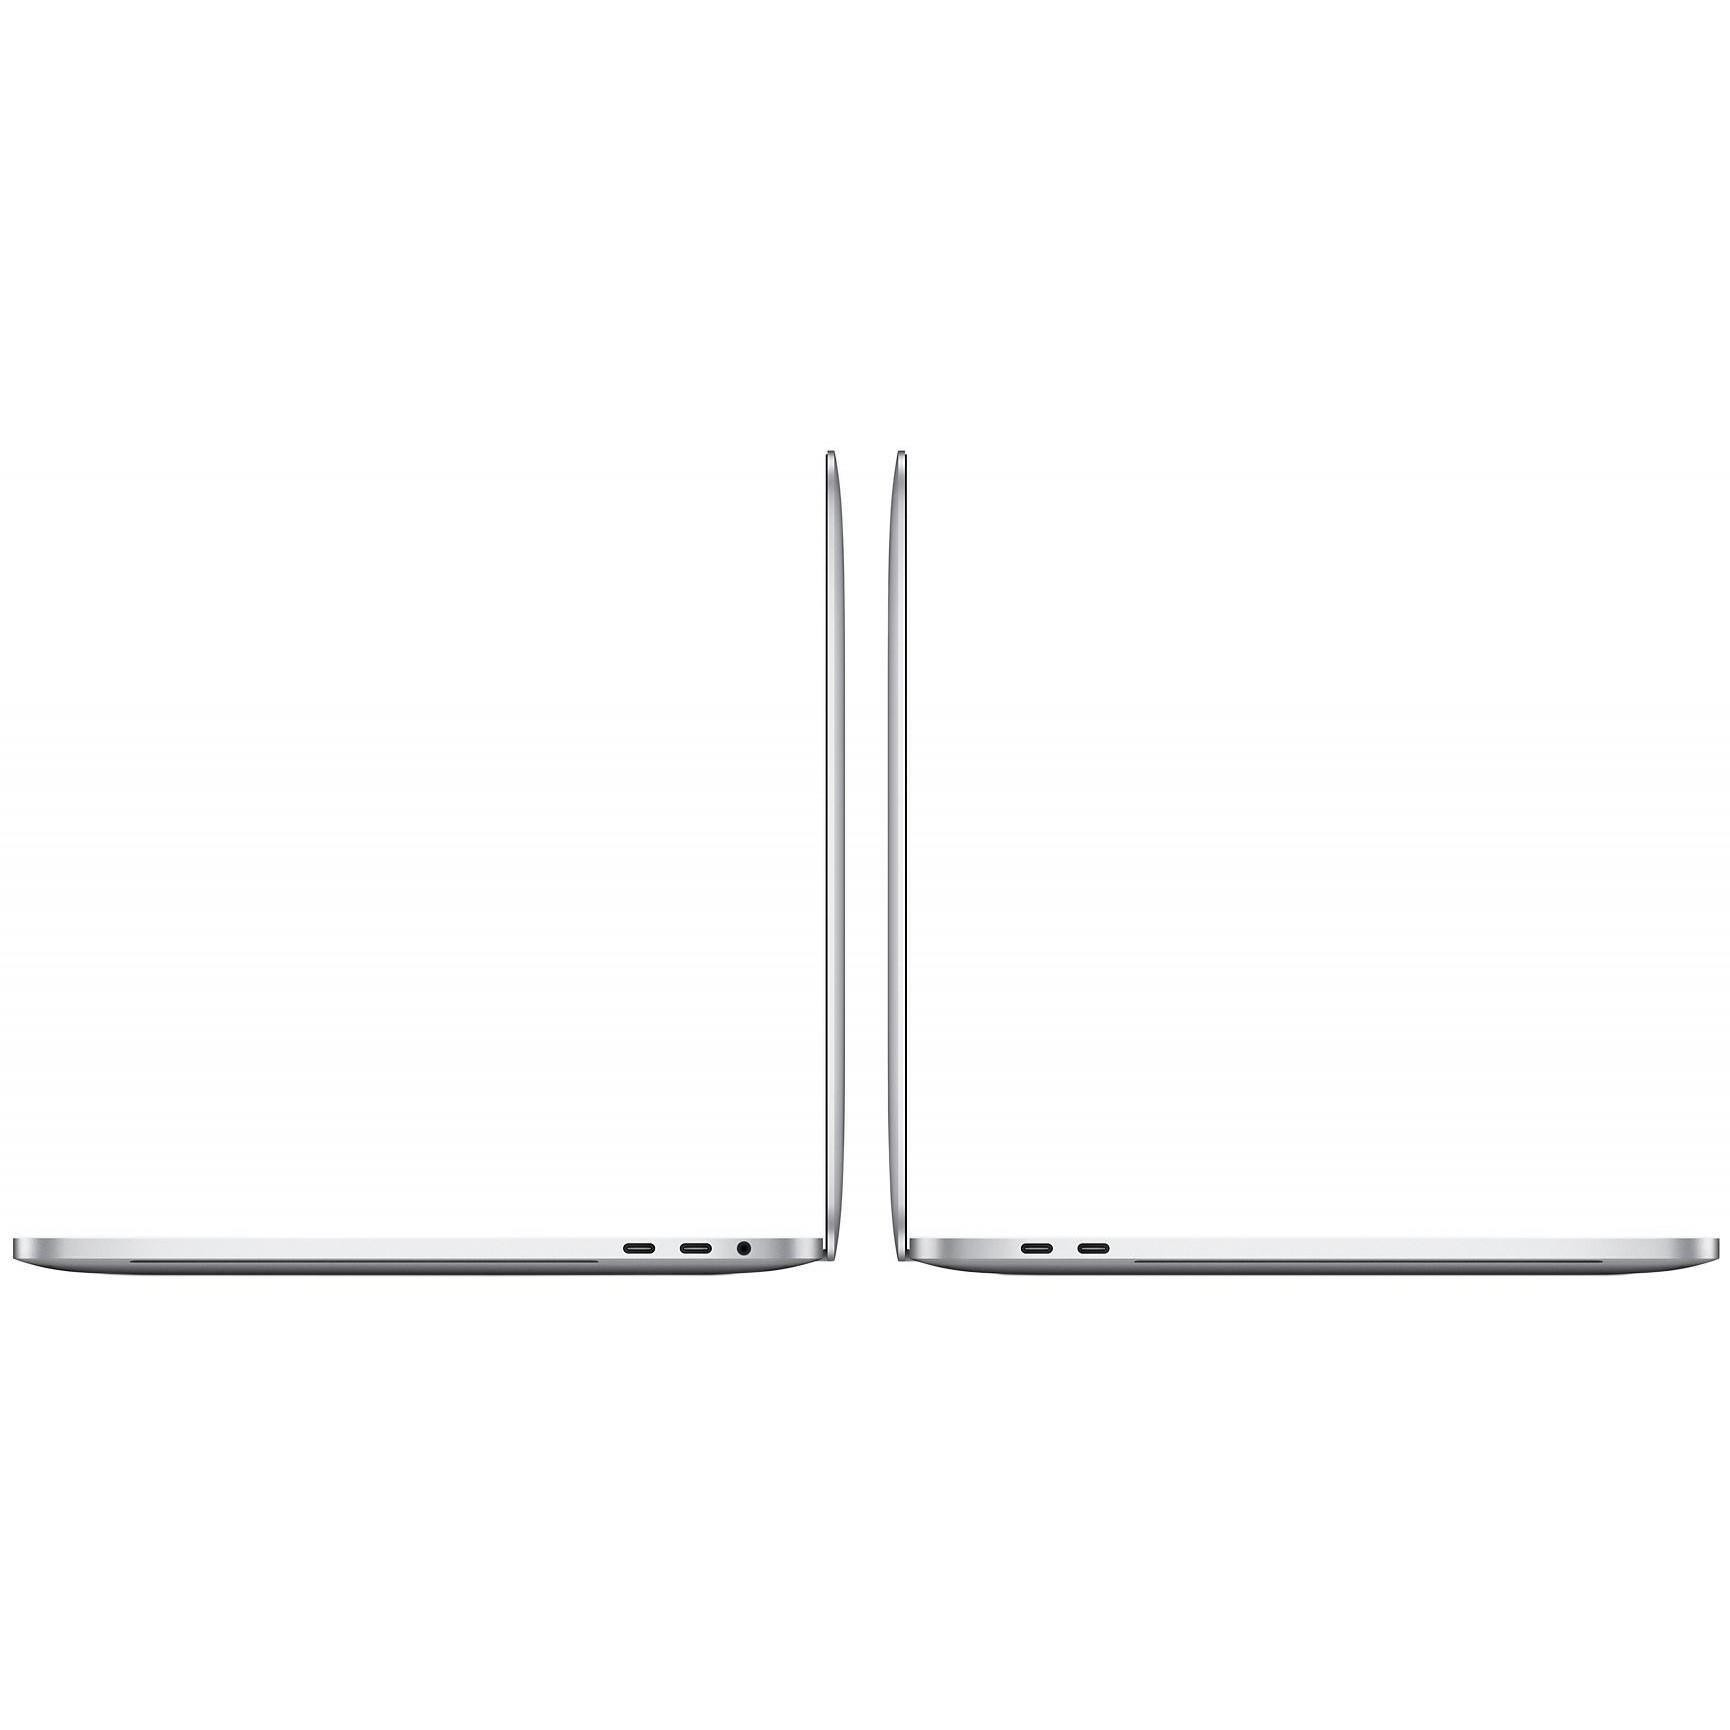 Apple MacBook Pro 13 Silver 2017 (MPXX2) б/у